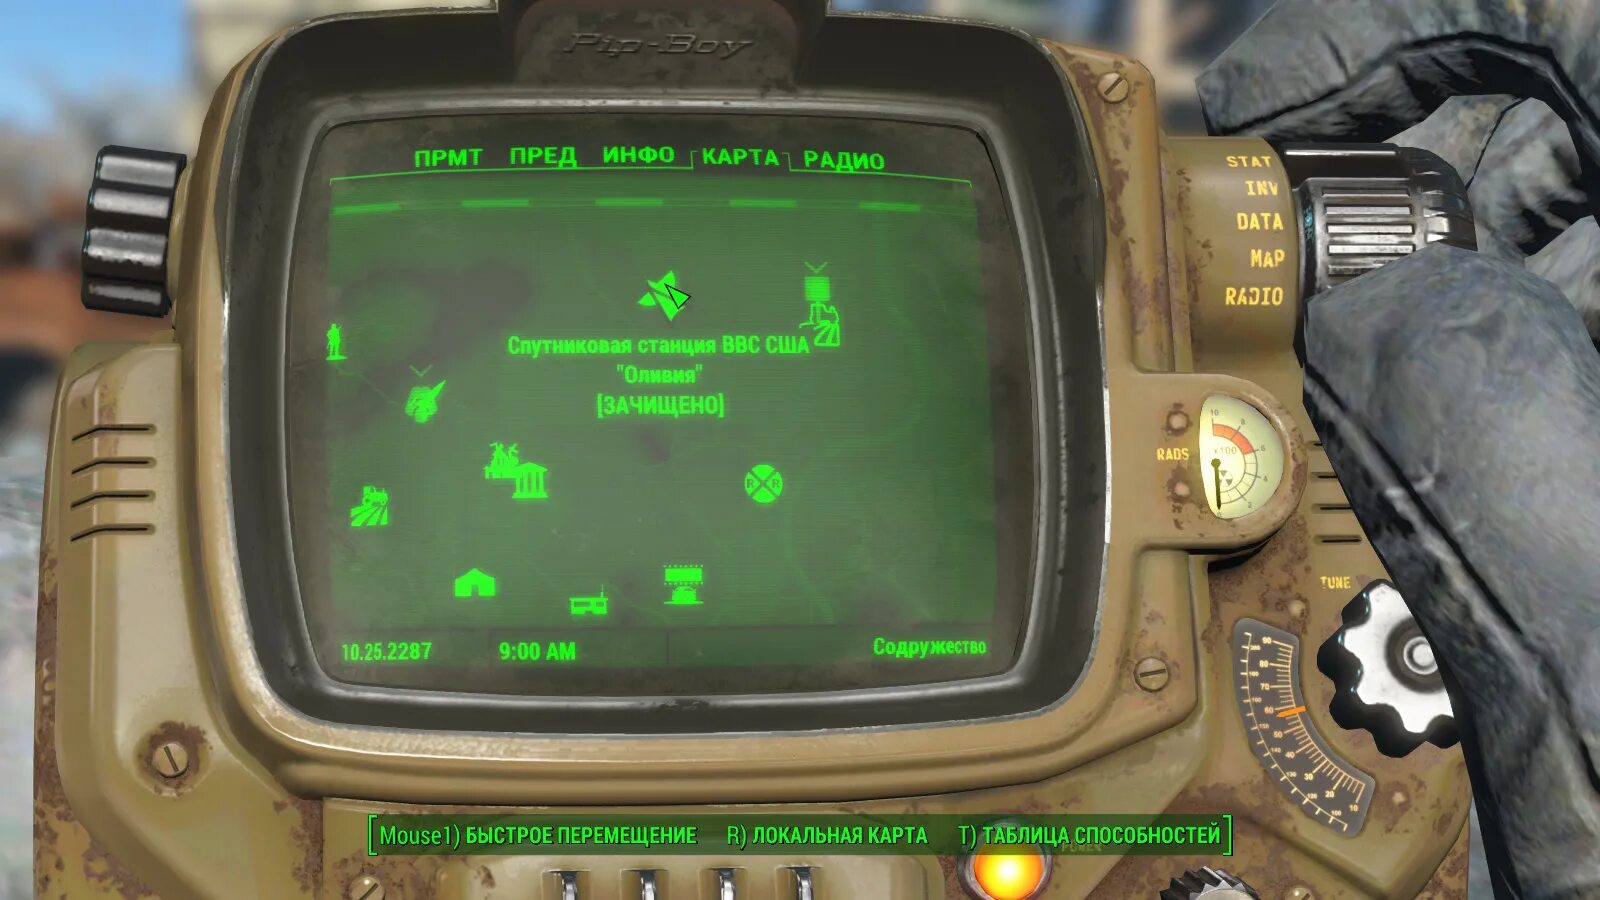 Fallout 4 как открыть ящик. Убежище мэра Бостона Fallout 4. Fallout 4 спутниковая станция ВВС США.